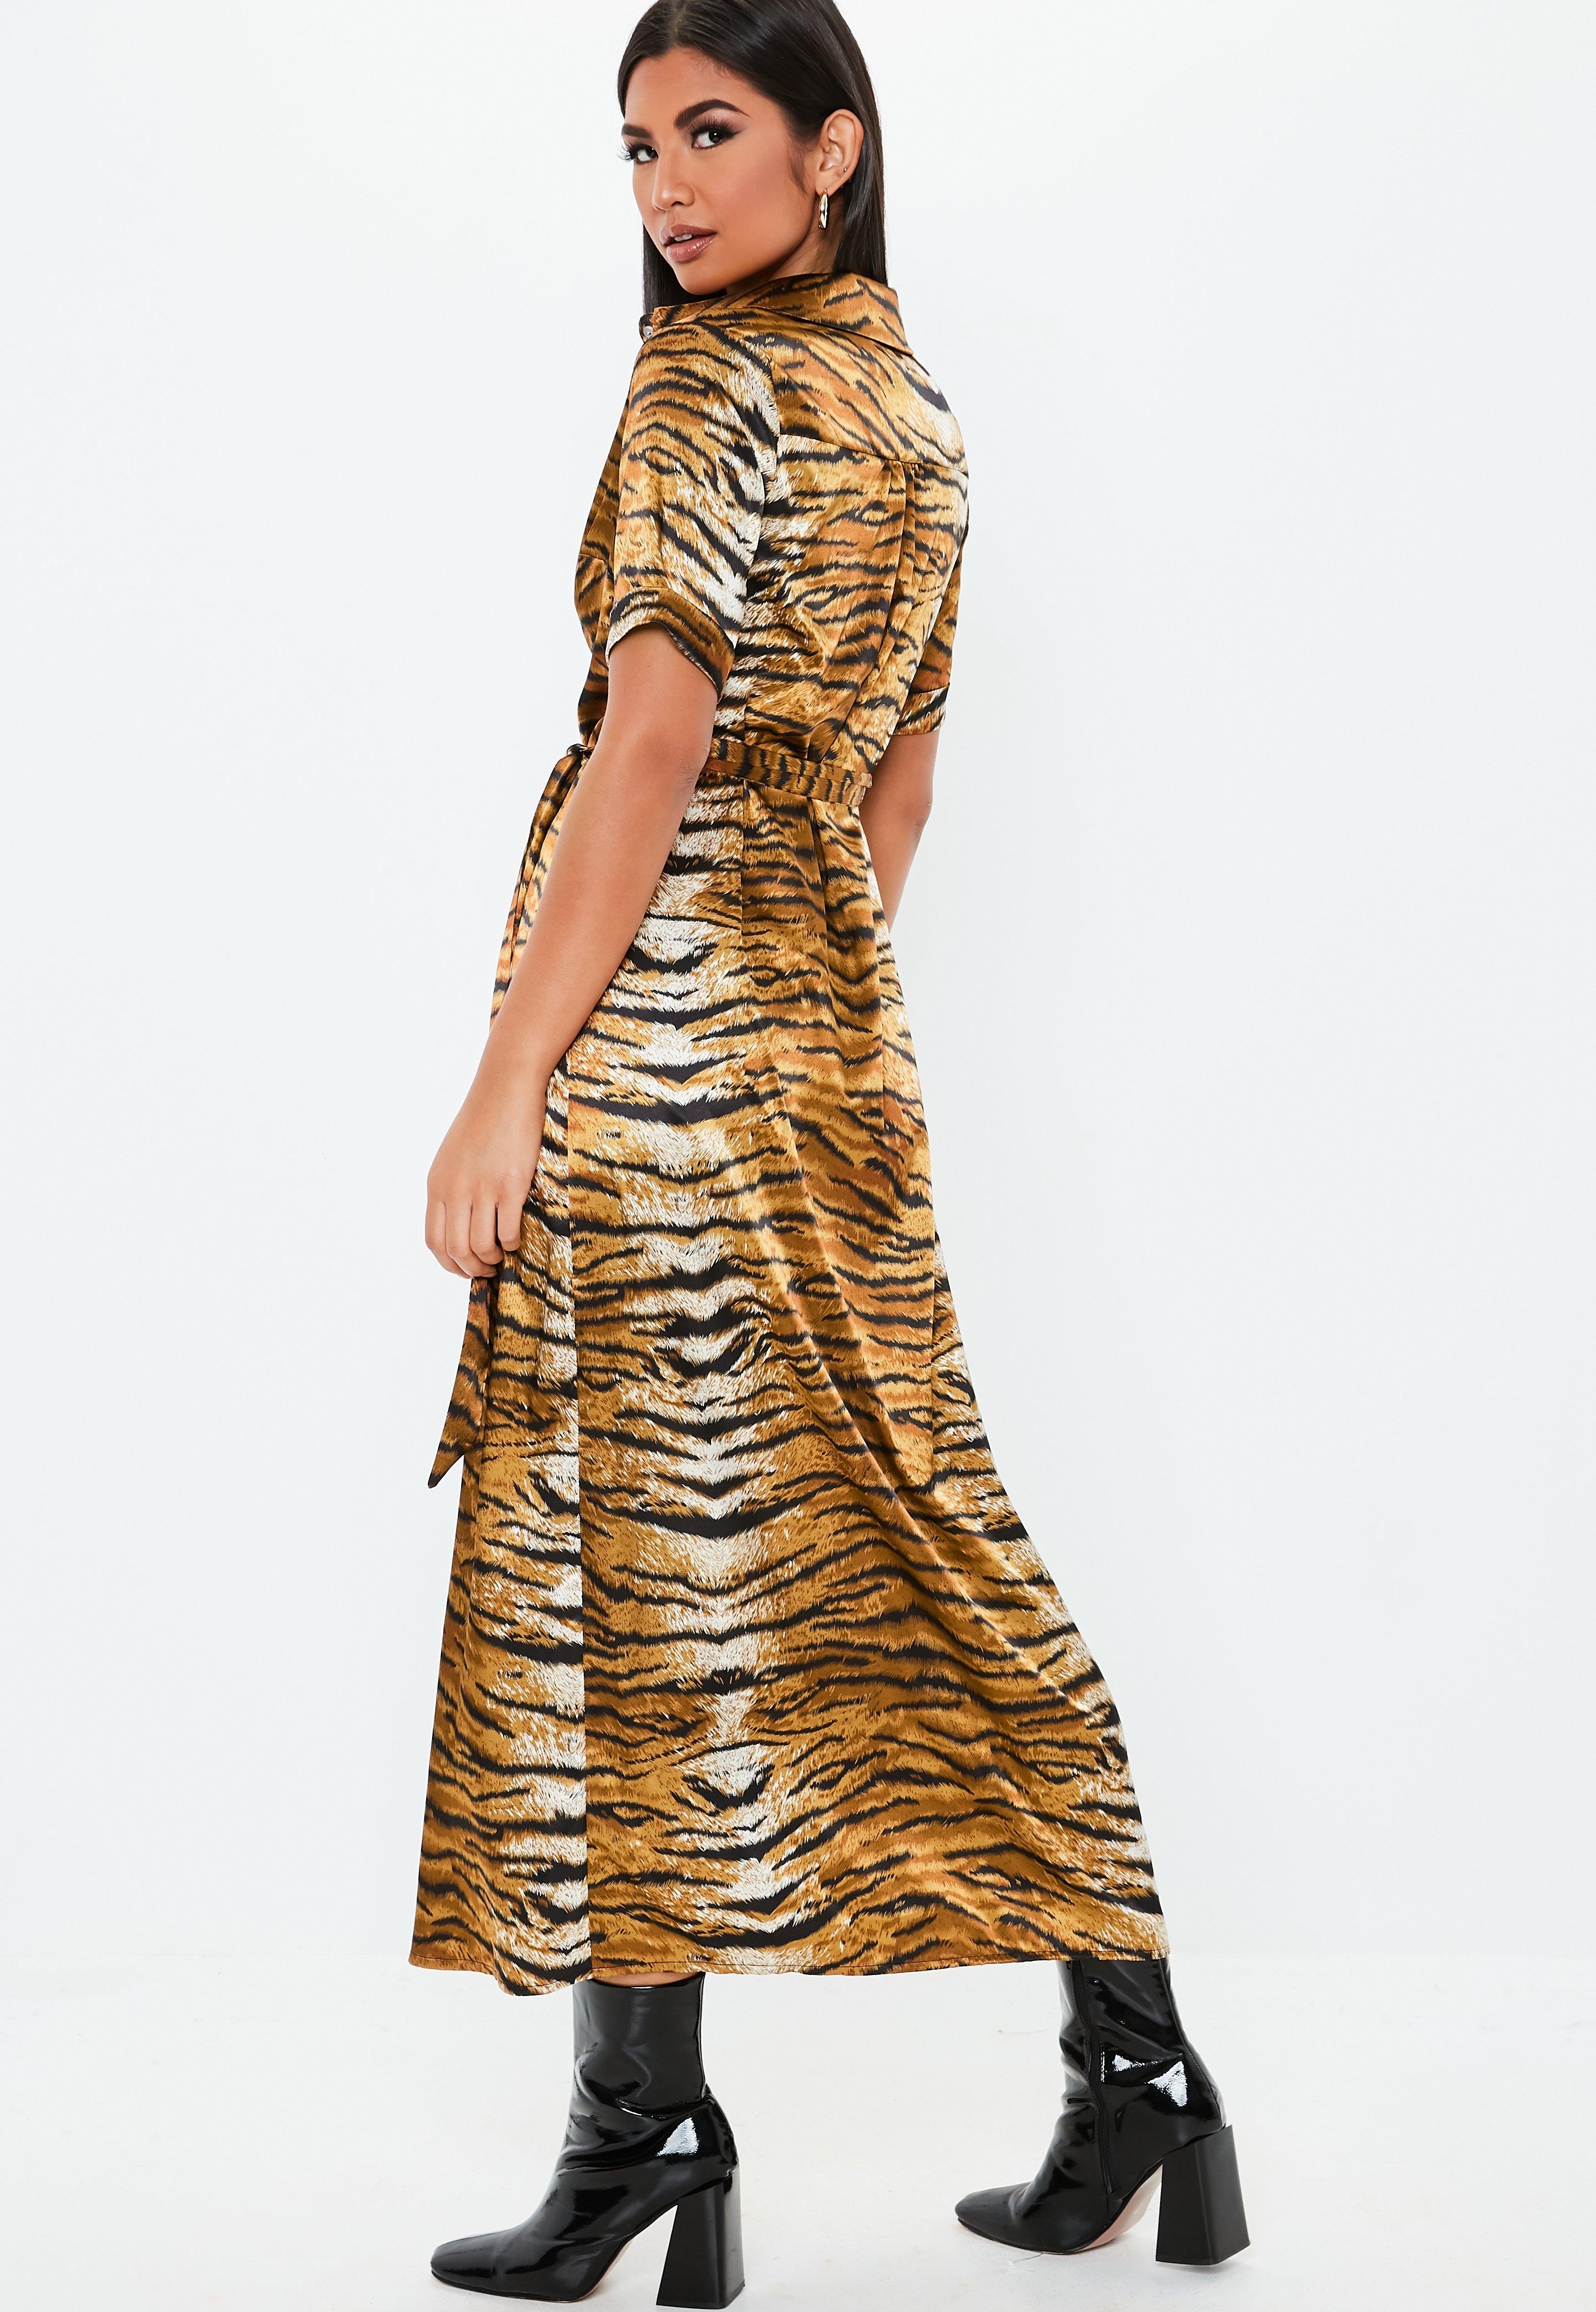 Missguided Satin Gold Tiger Print Midaxi Shirt Dress in Metallic - Lyst